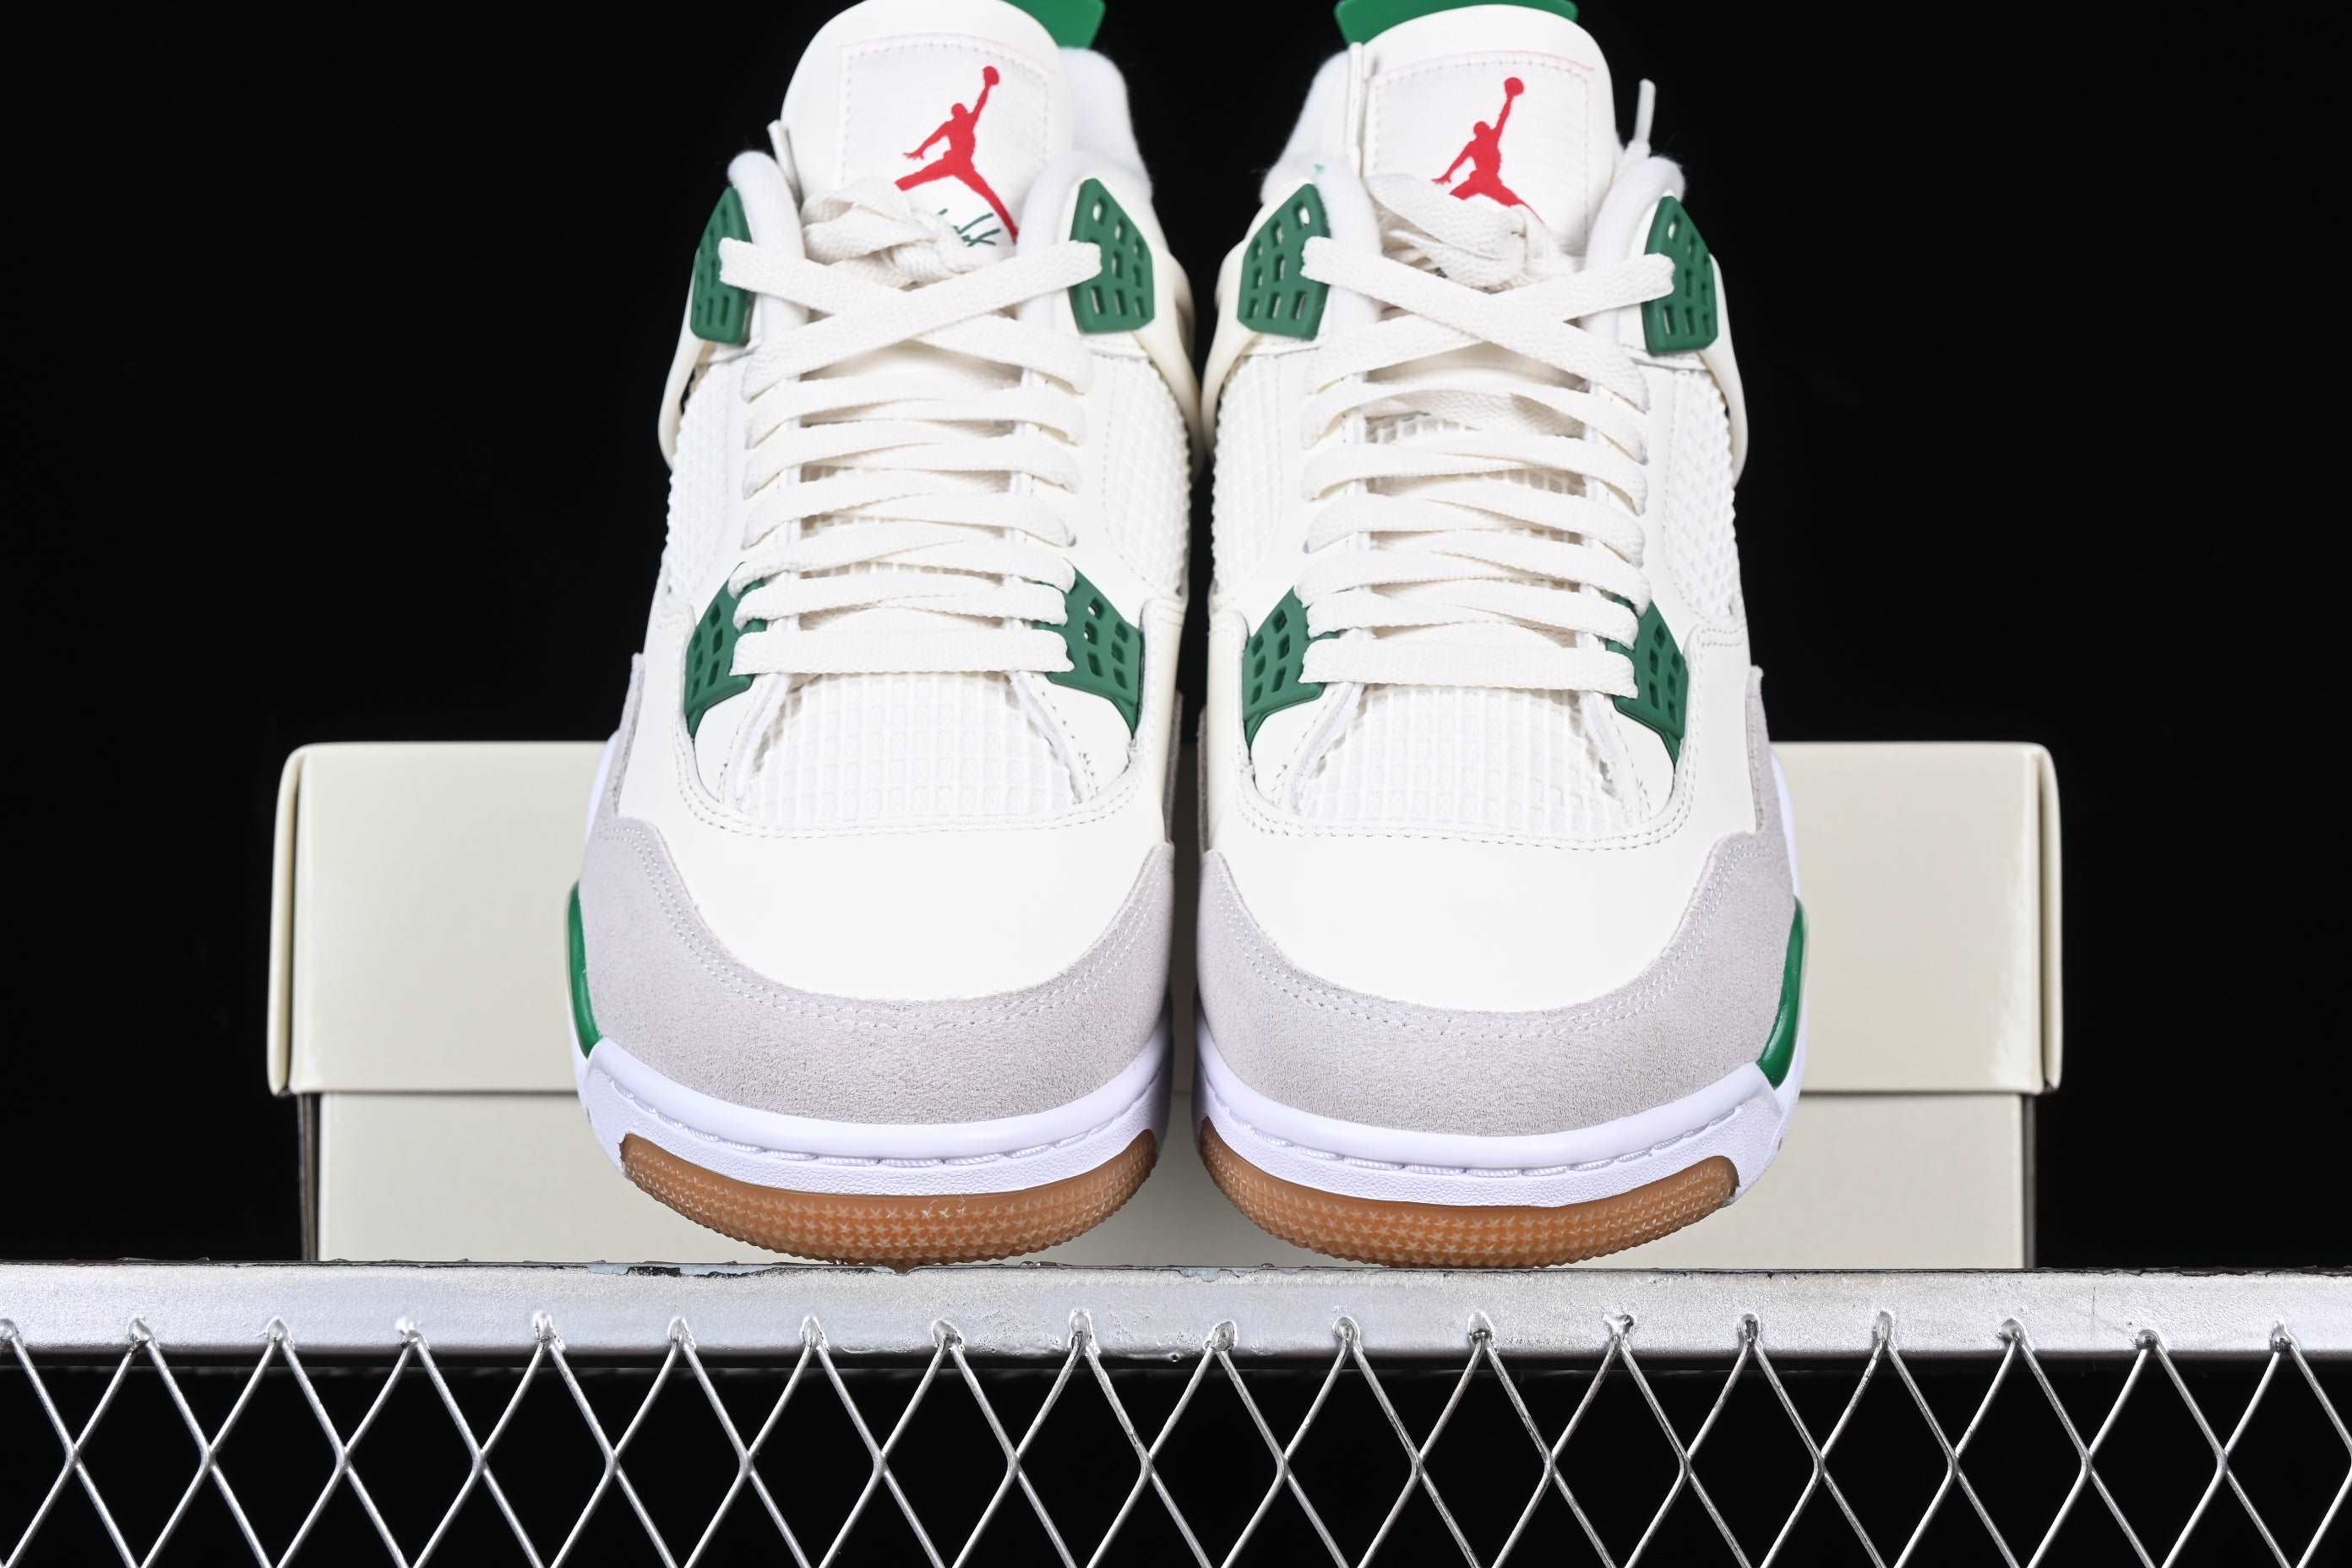  Nike SB Air Jordan 4 Pine Green AJ4 